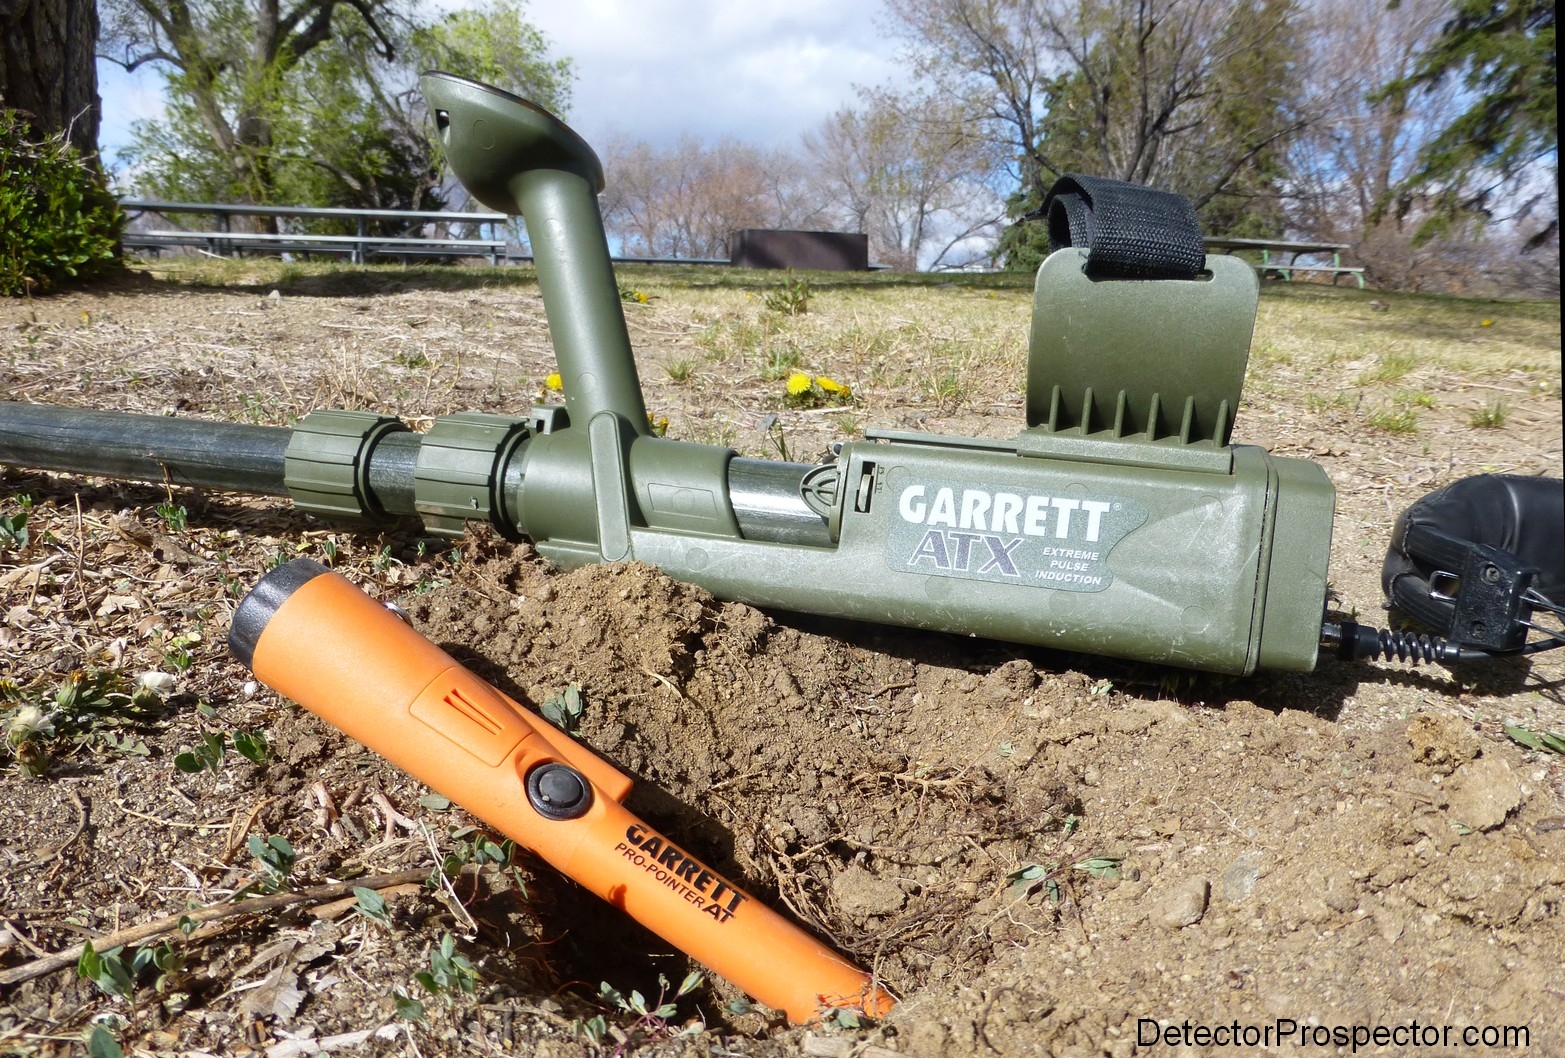 garrett-atx-and-garrett-carrot.jpg